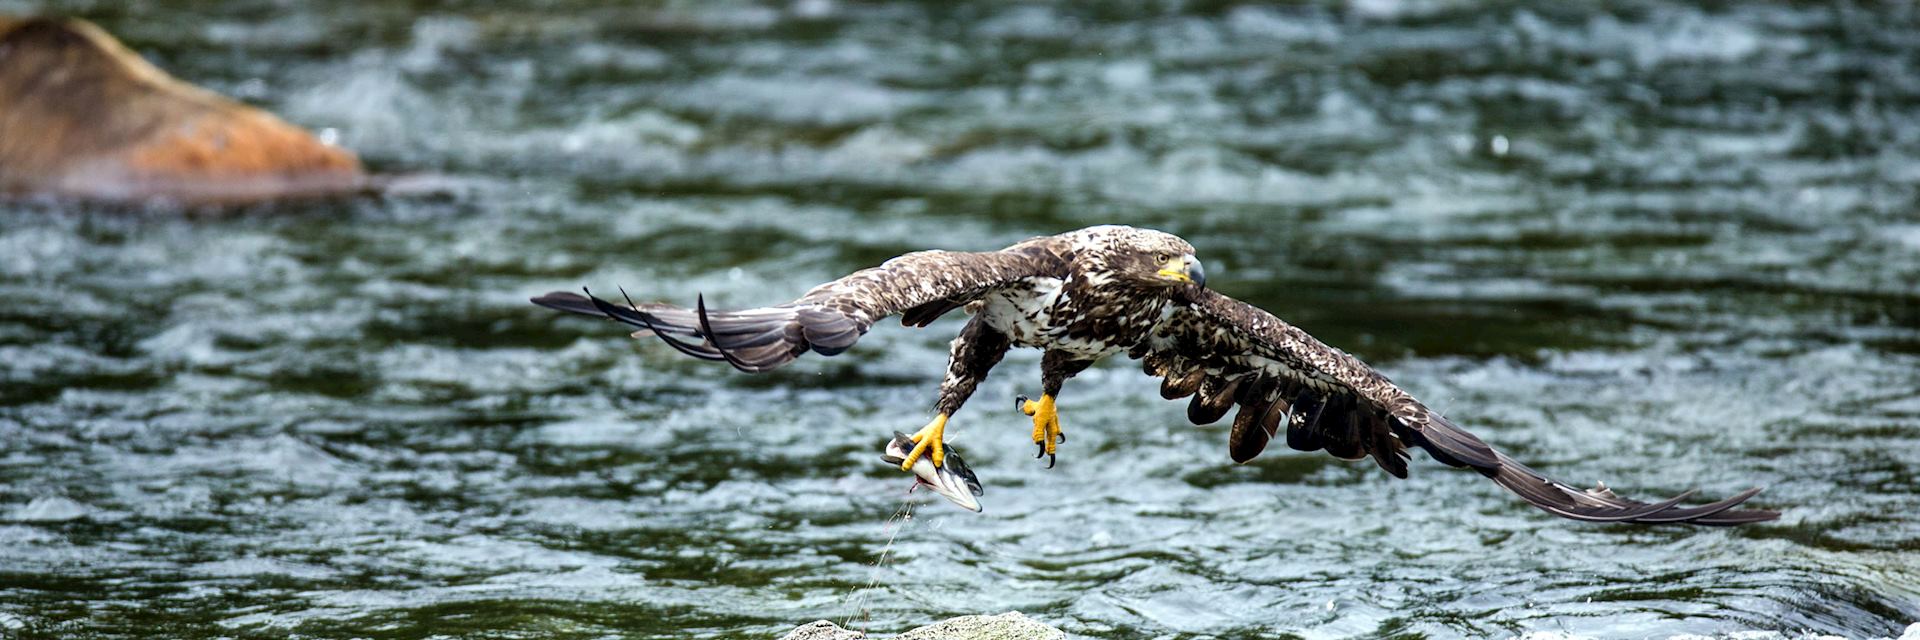 Eagle with a fish, Alaska